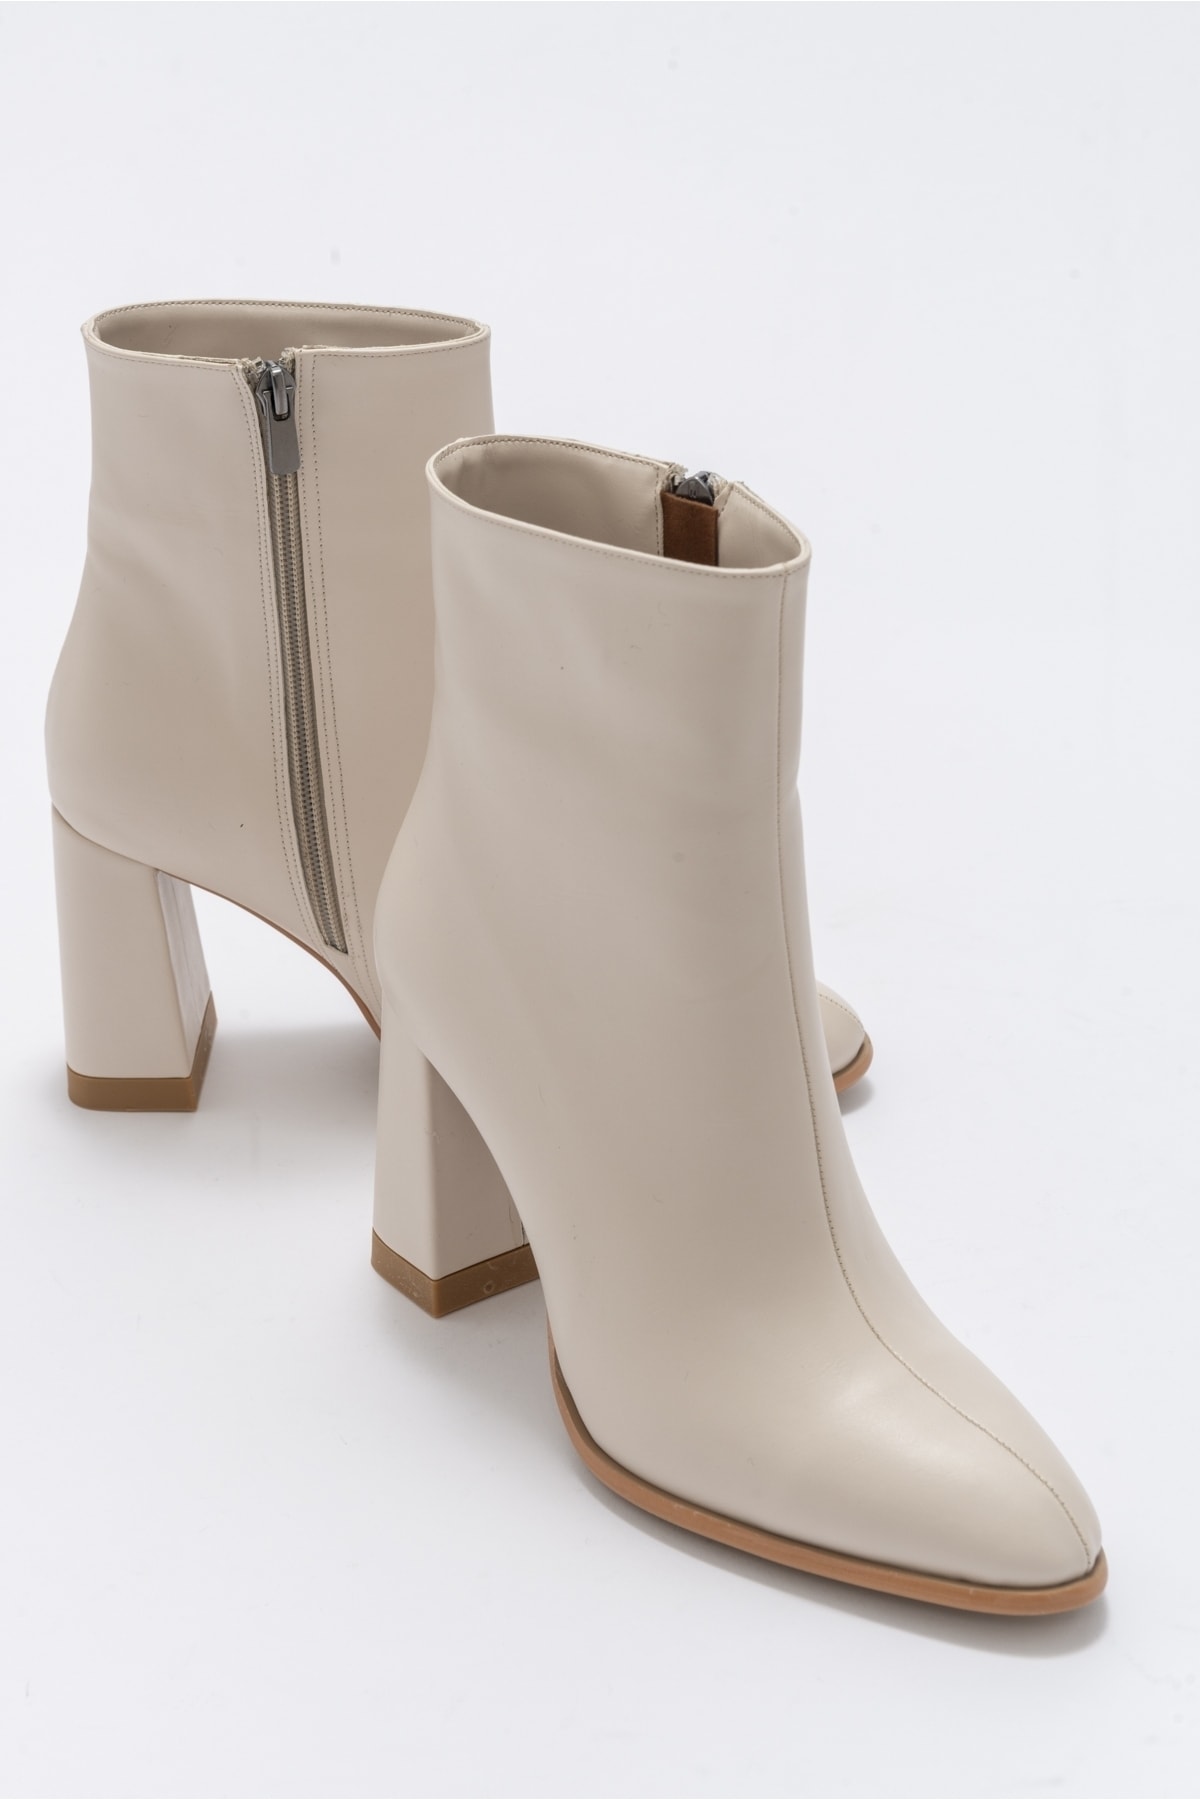 LuviShoes Women's Jewel Beige Skin Heeled Boots.